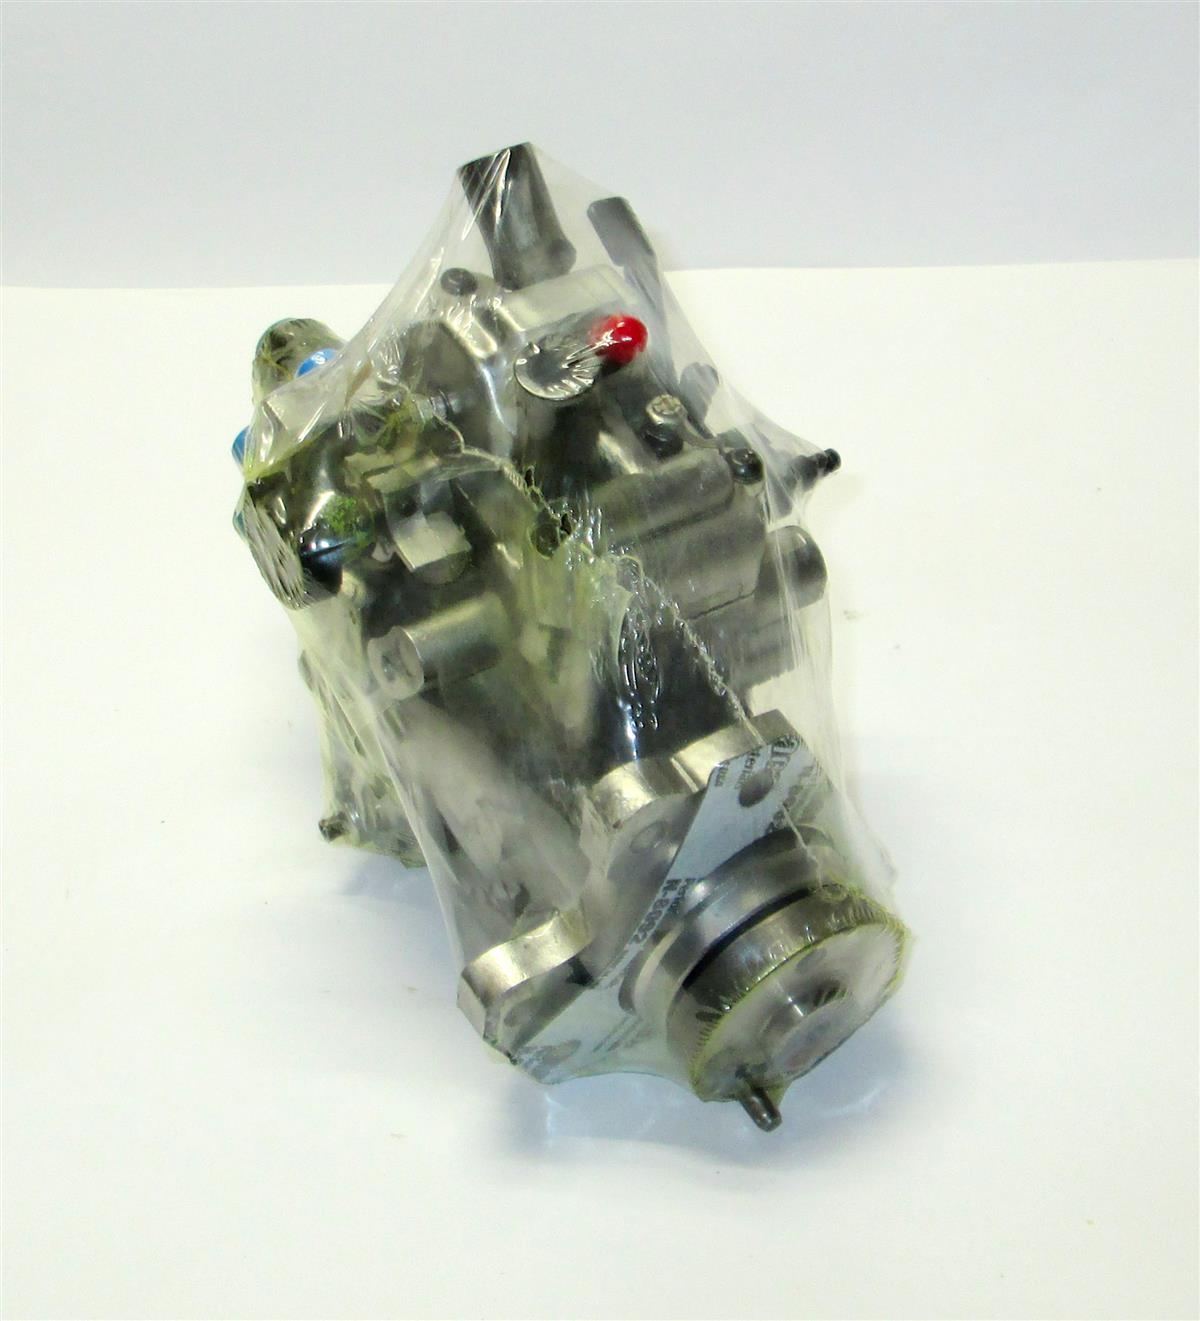 HM-3466R | Hm-3466R Stanadyne Fuel Injection Pump 6.5L Non-Turbo GM Style Diesel Engine HMMWV (25).JPG